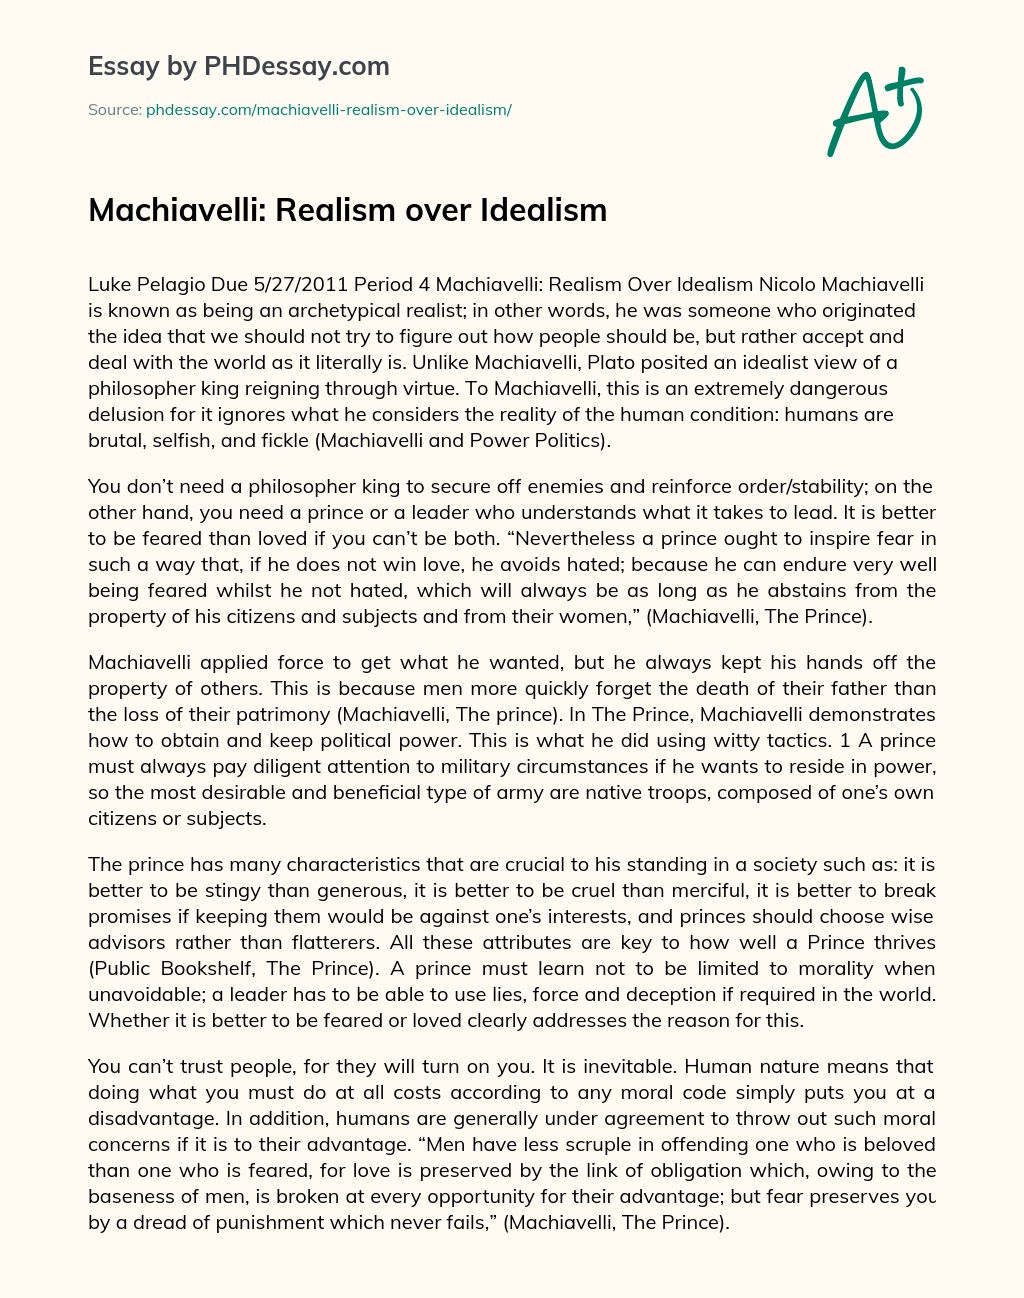 Machiavelli: Realism over Idealism essay